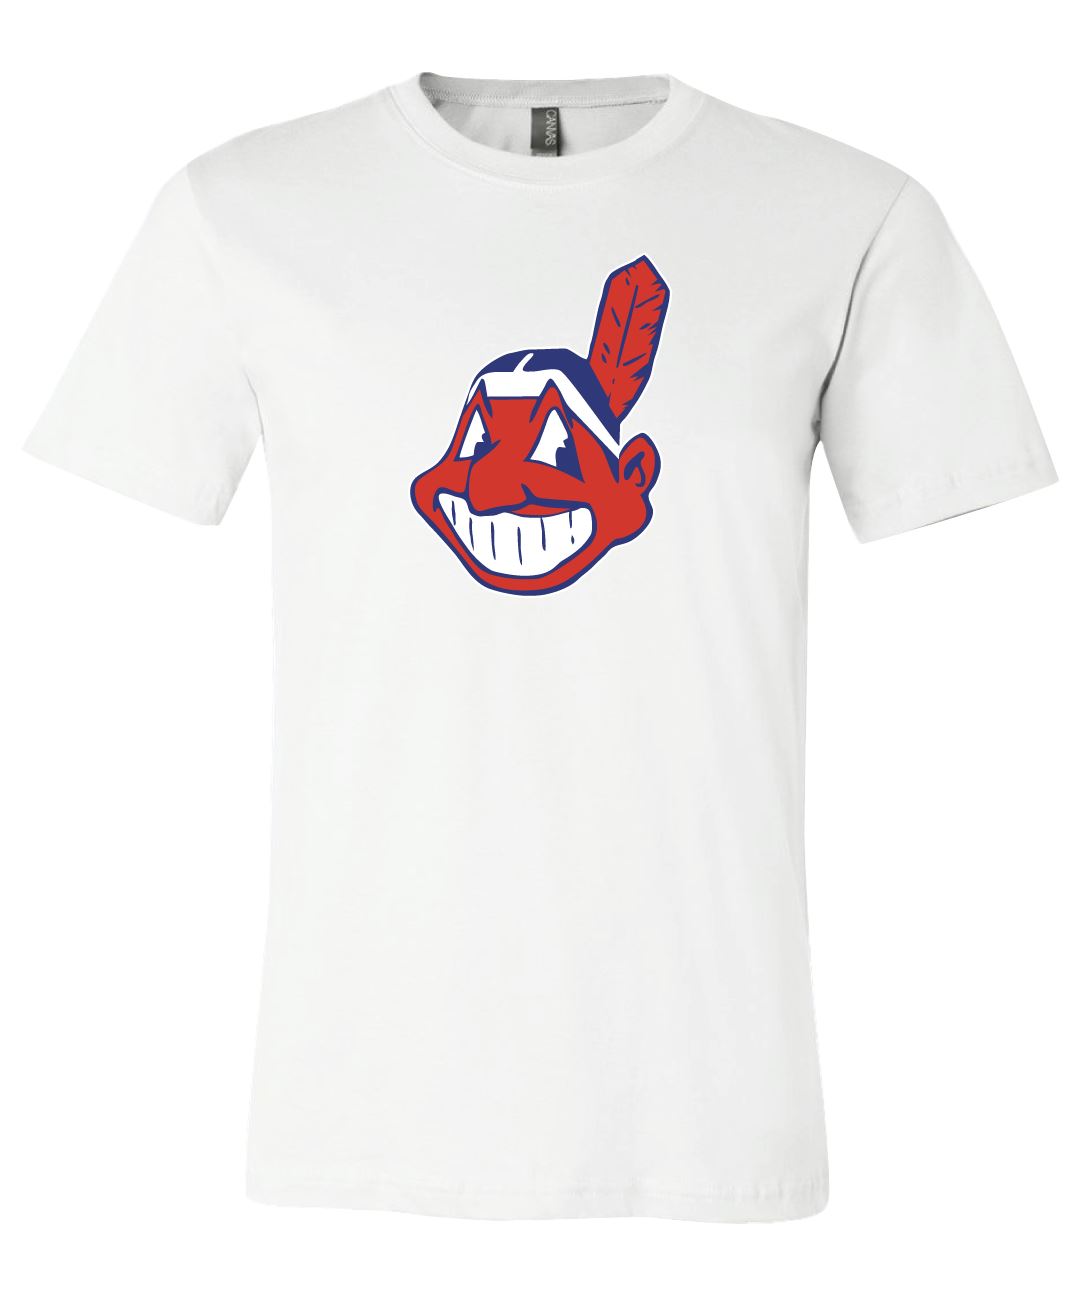 Cleveland Caucasians Baseball Mascot Cleveland Indians shirt